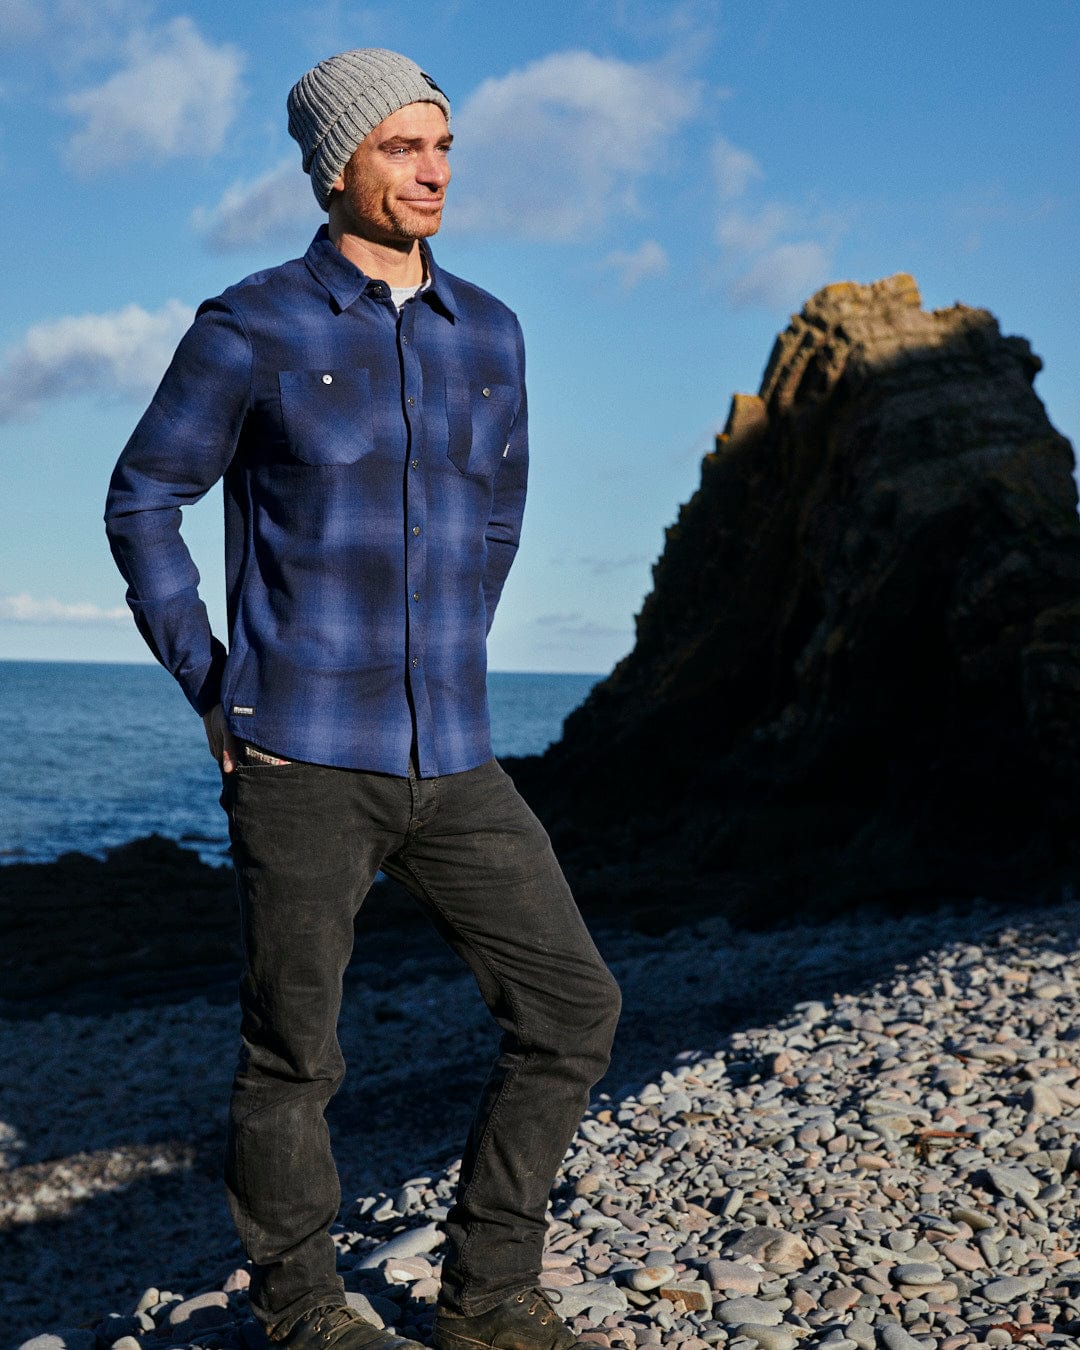 A man standing on a rocky beach with a Saltrock Farris - Mens Check Shirt - Blue beanie on his head.